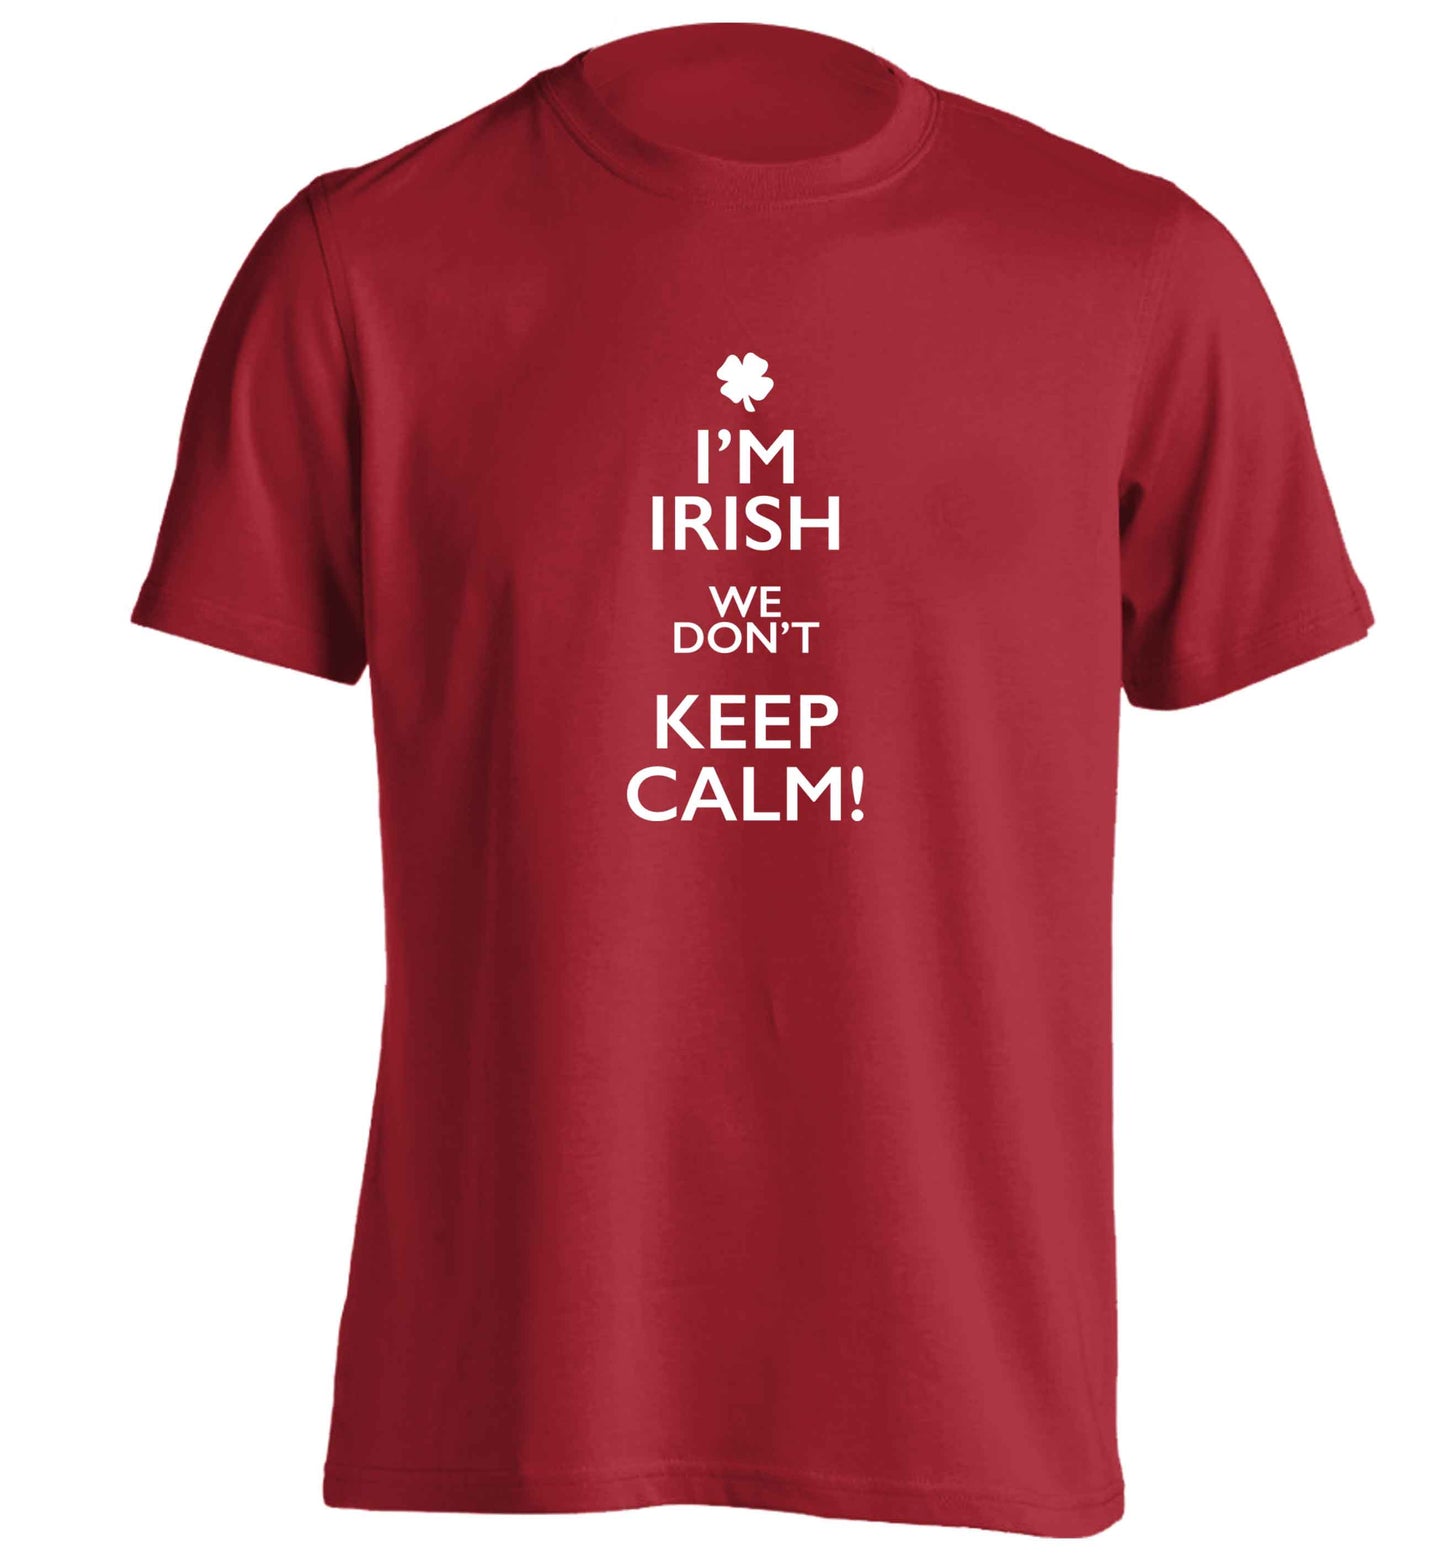 I'm Irish we don't keep calm adults unisex red Tshirt 2XL